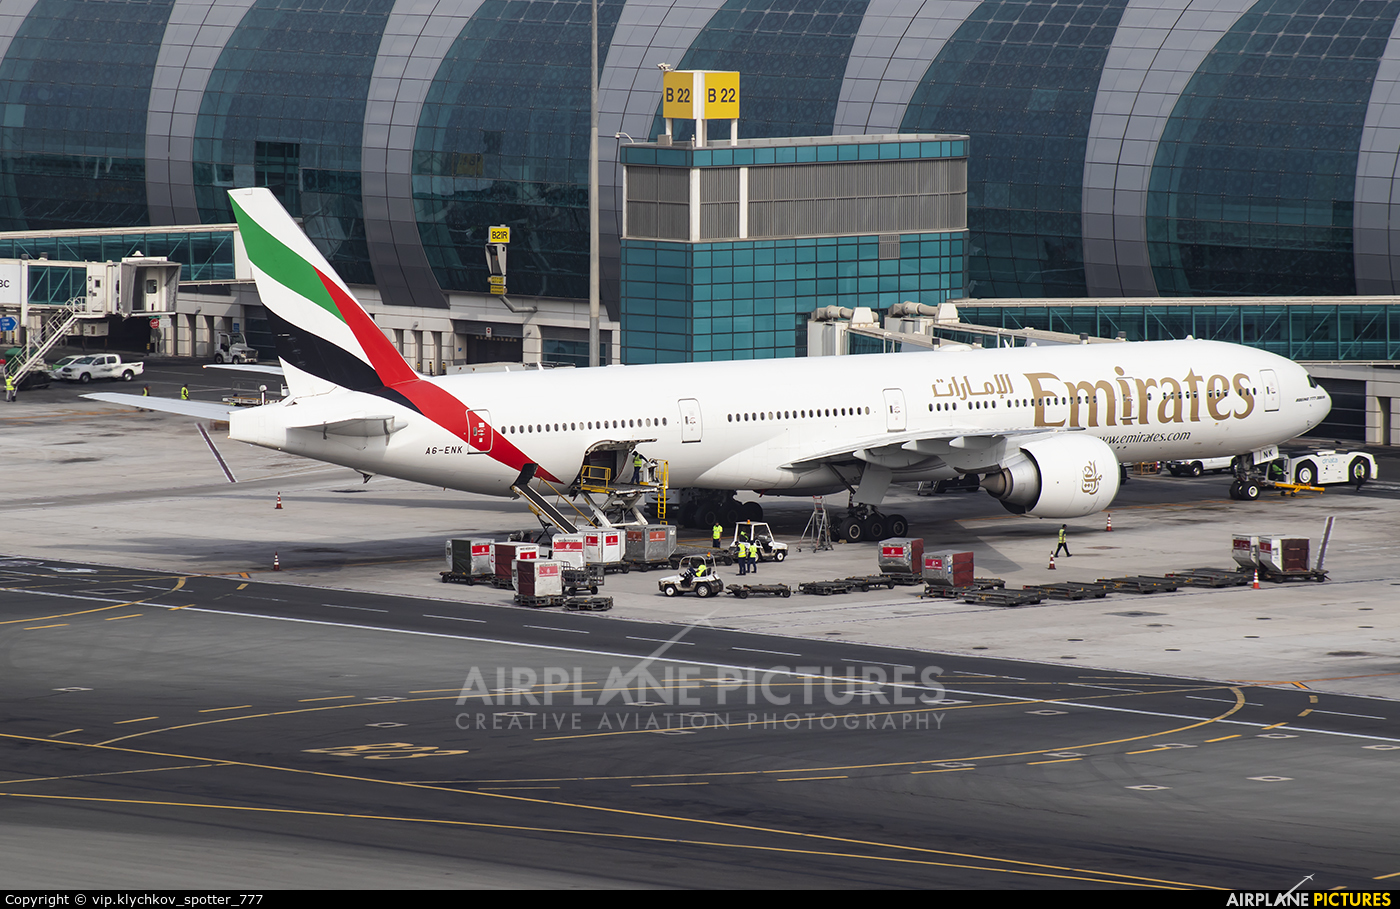 Emirates Airlines A6-ENK aircraft at Dubai Intl